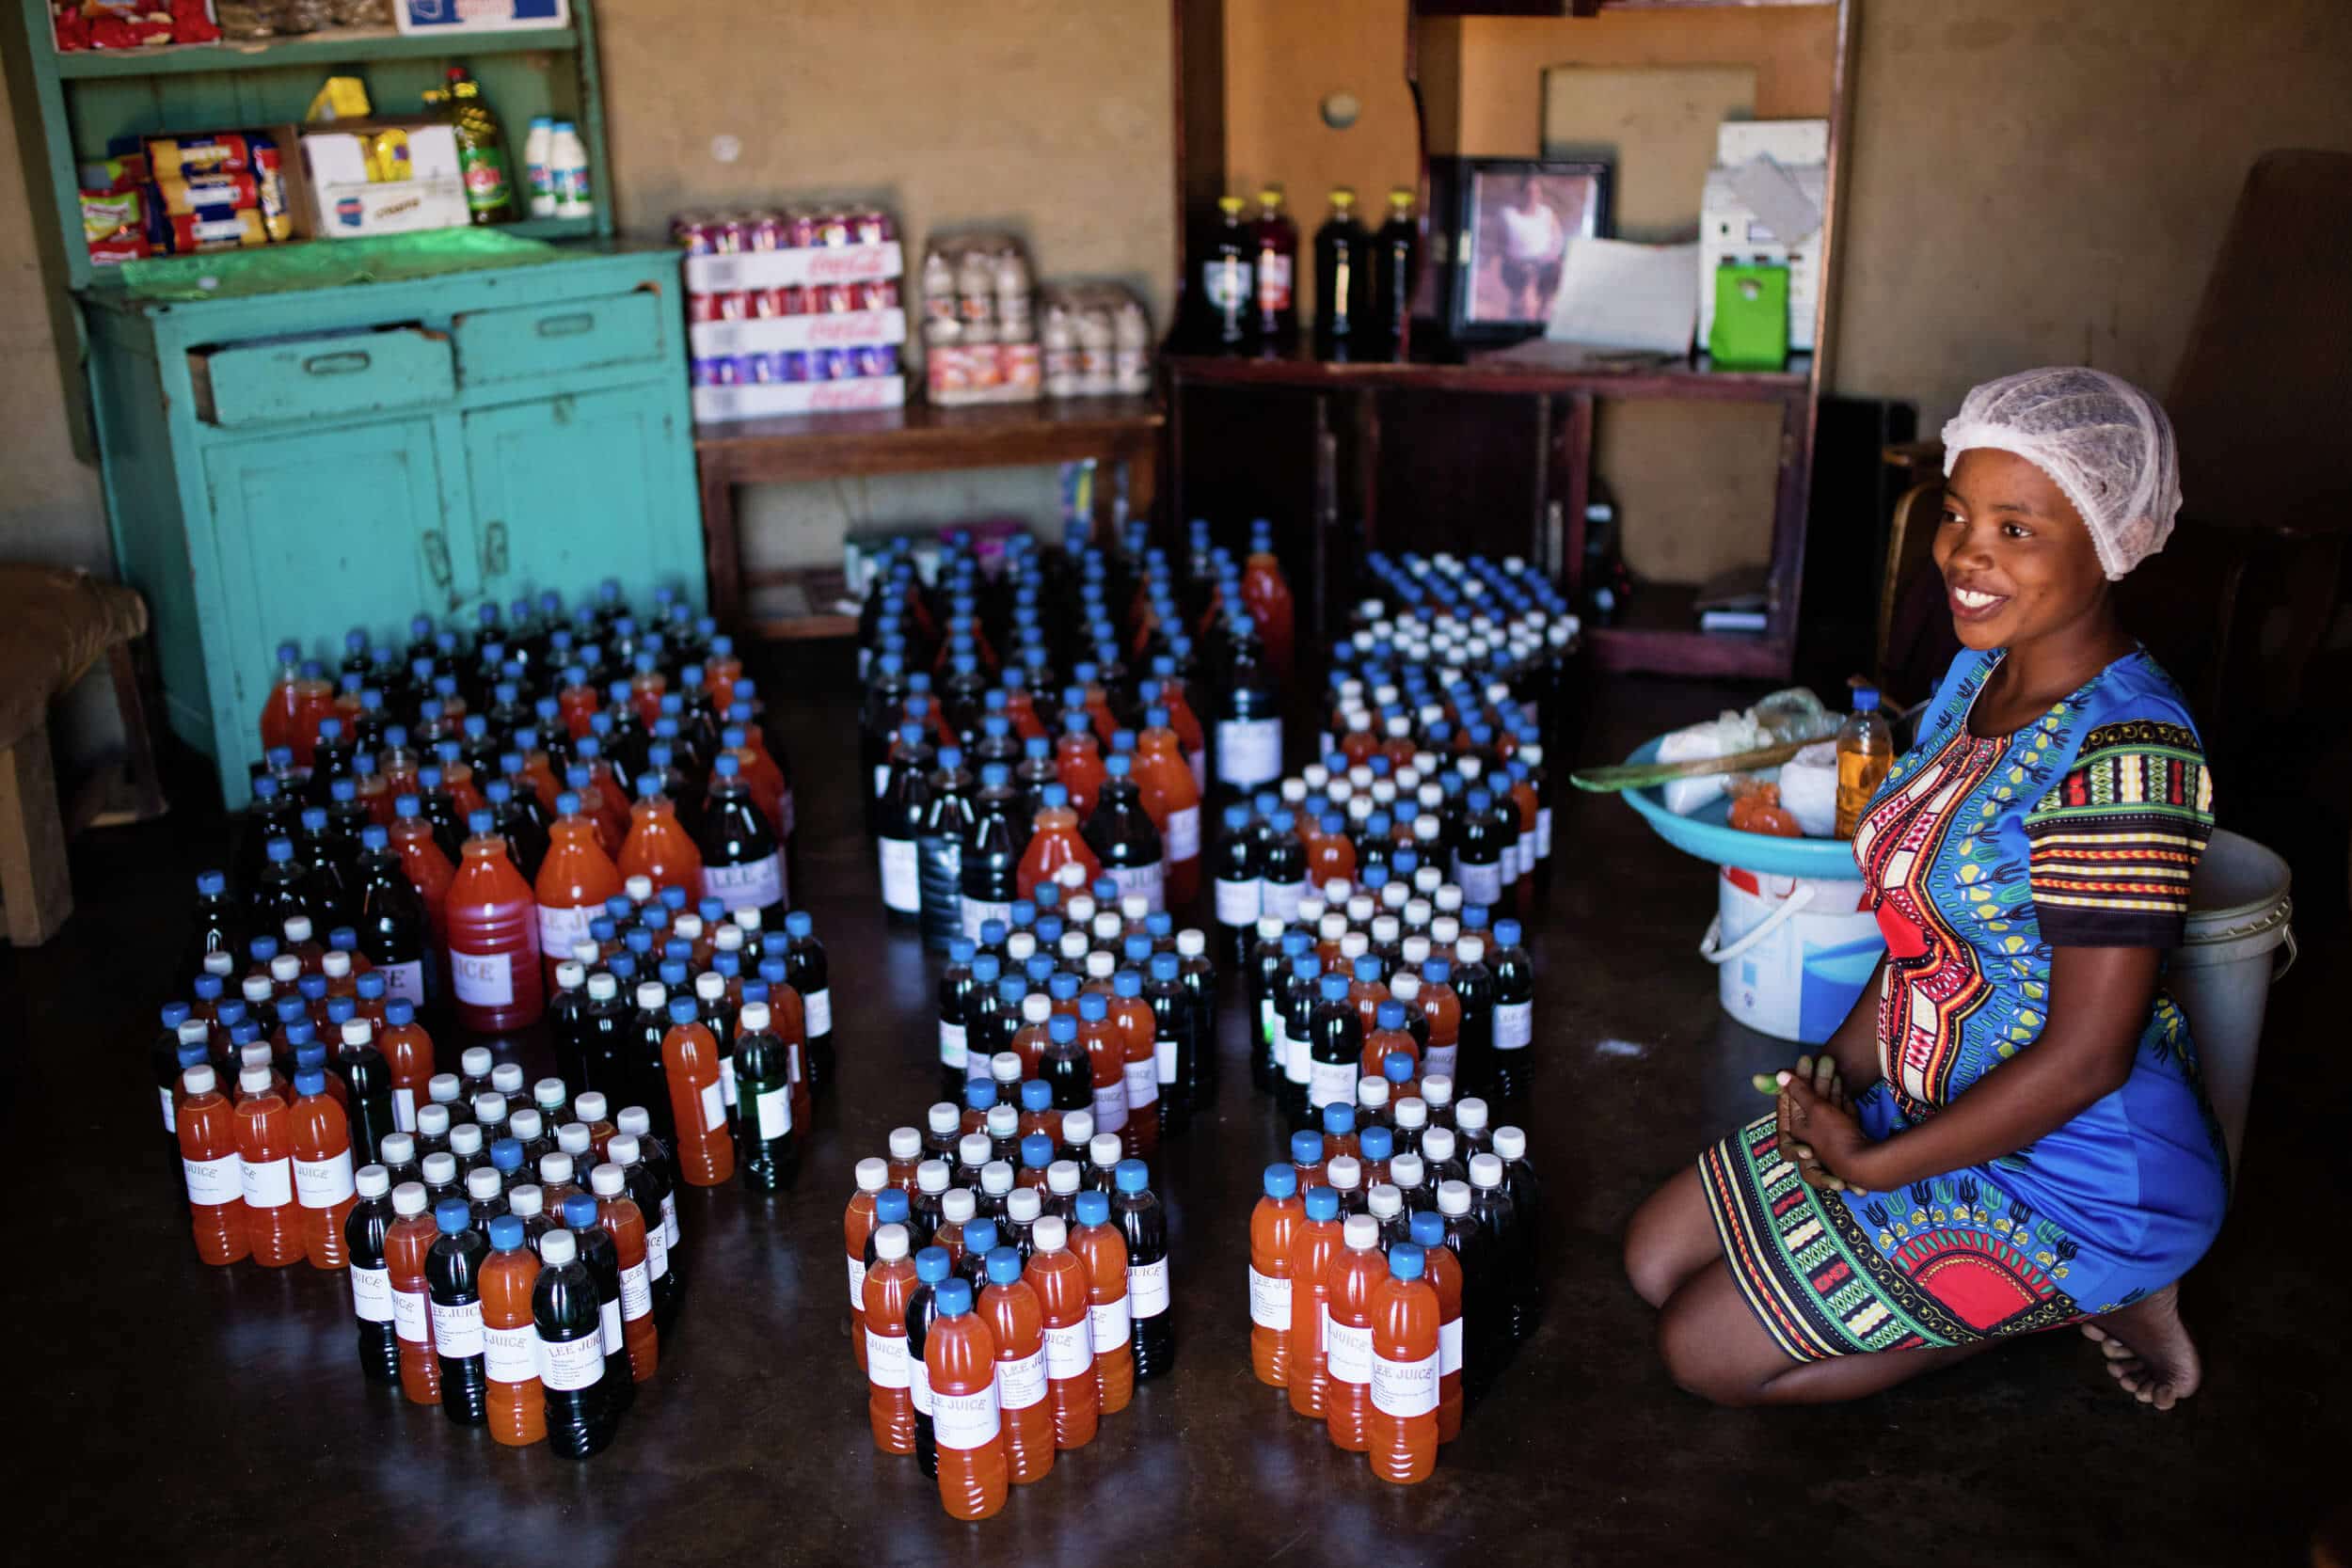 Woman business owner kneeling on floor with bottled sodas